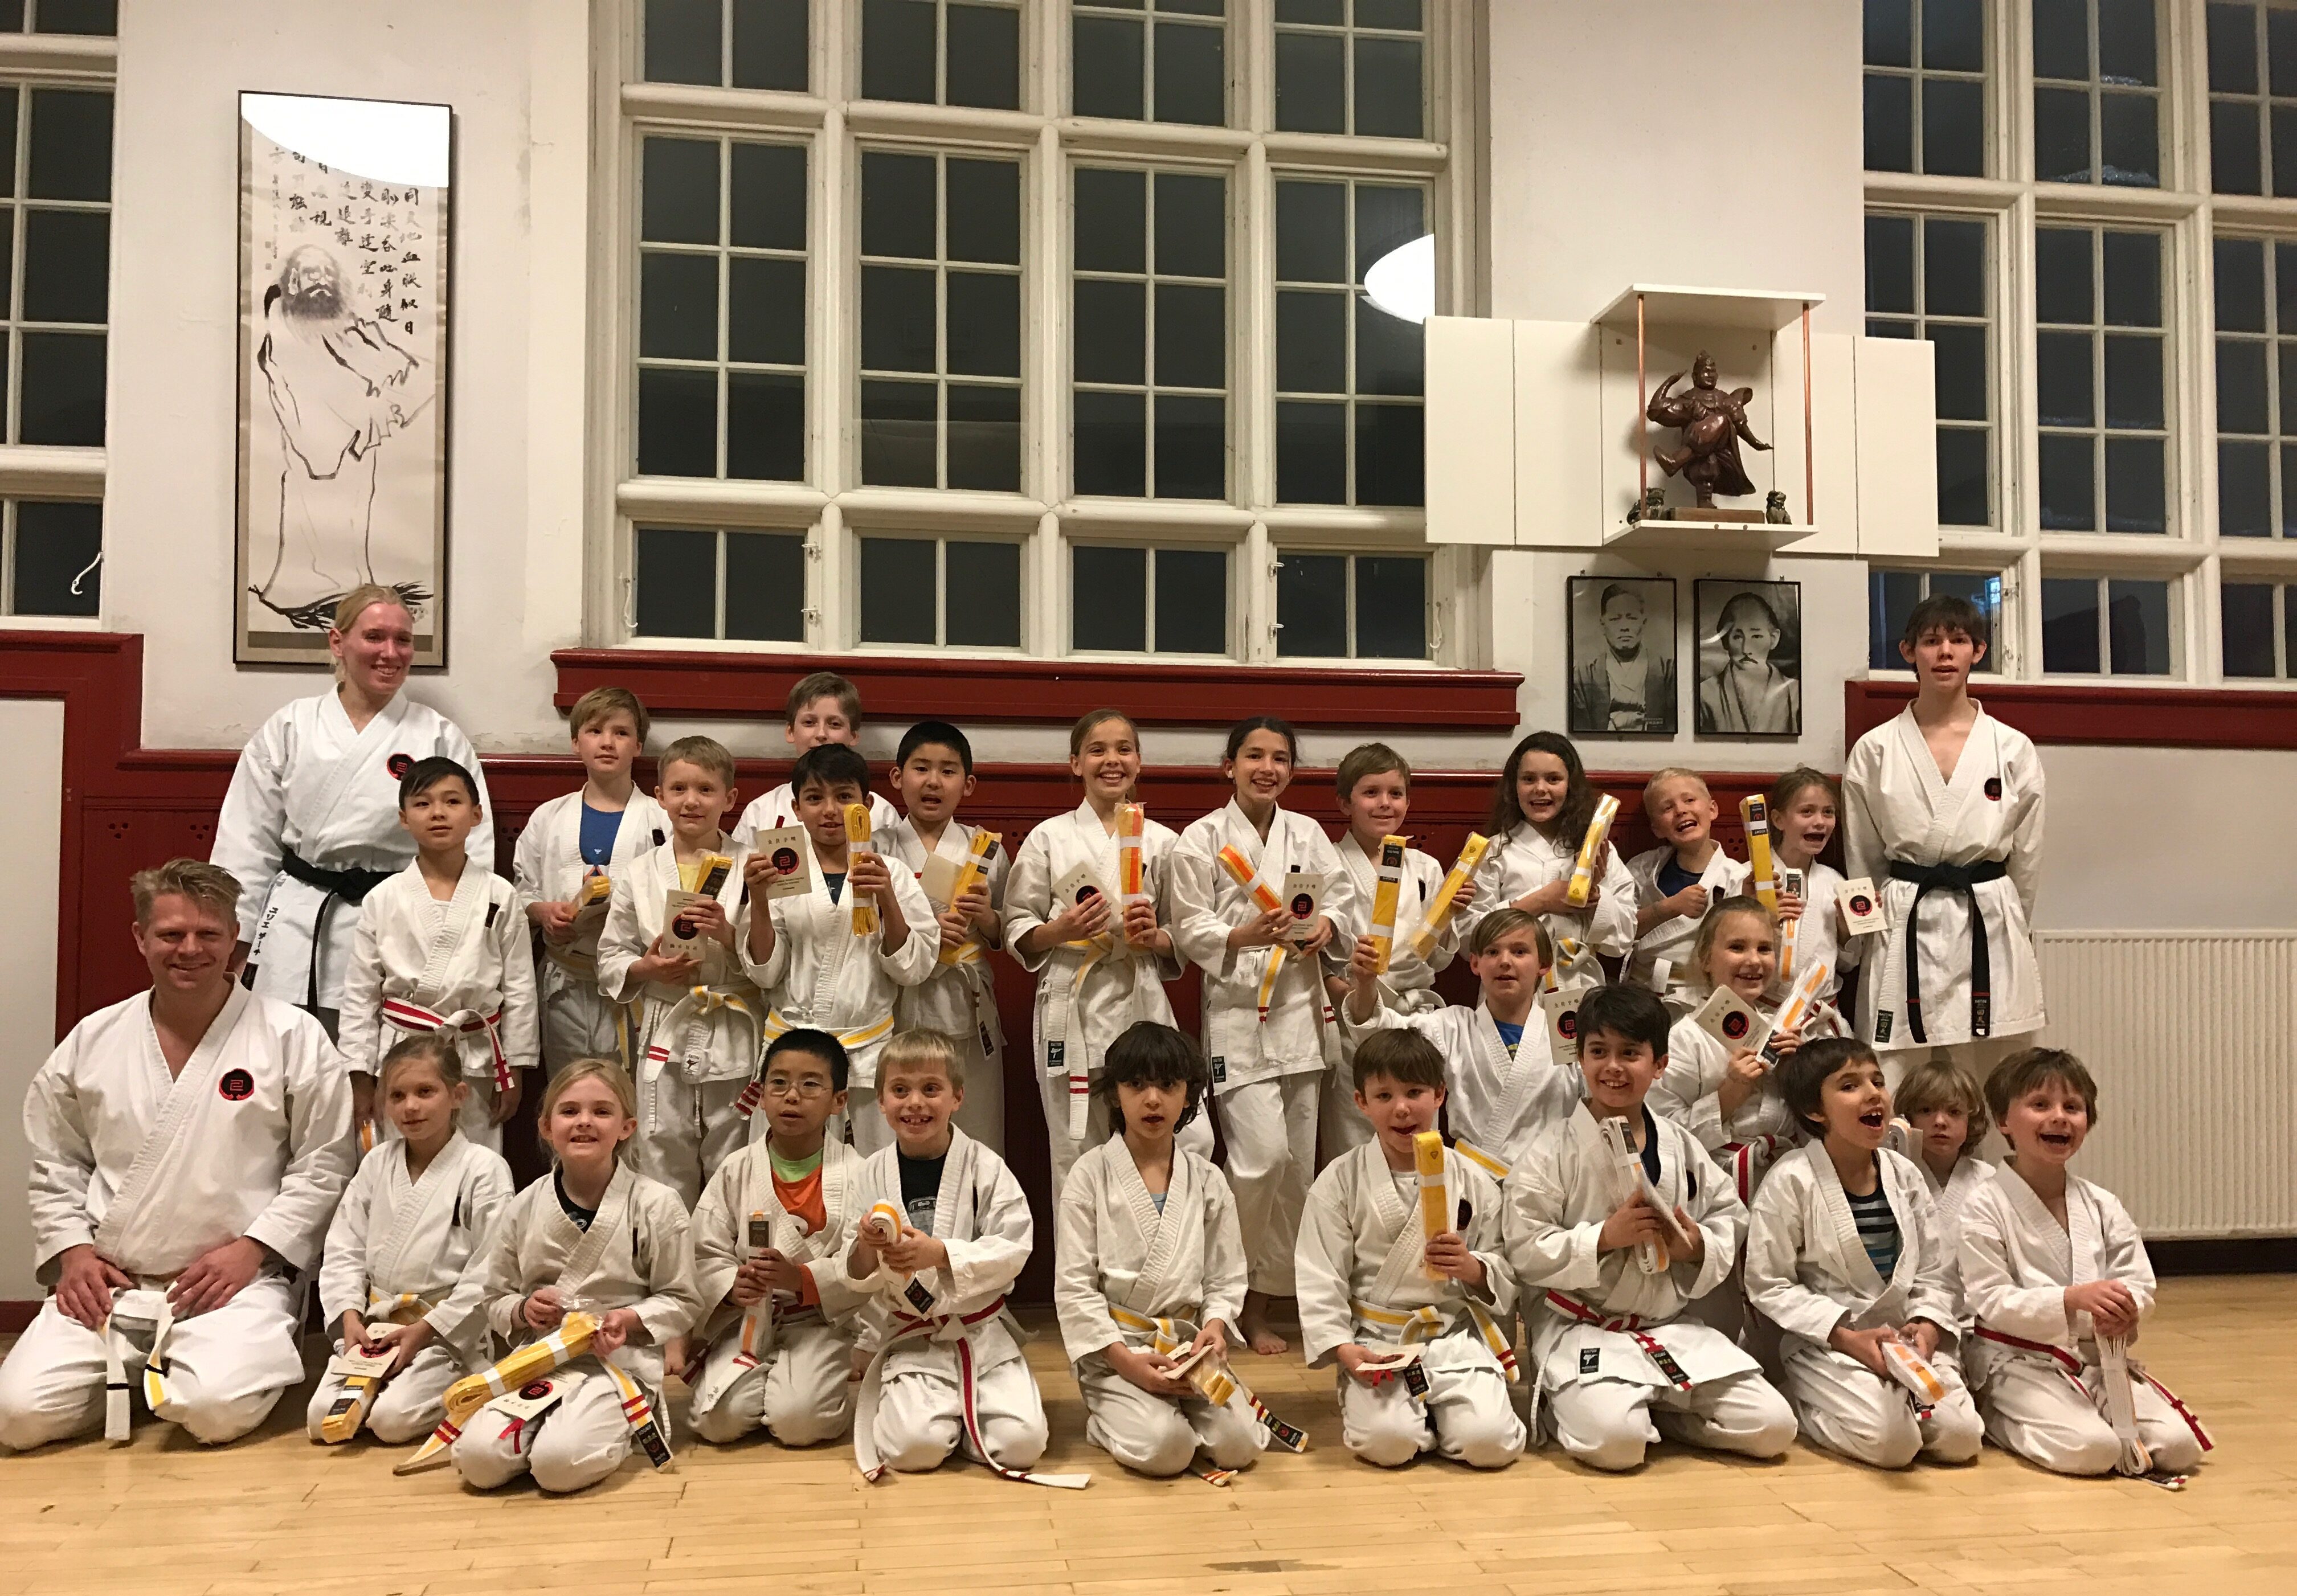 Østerbro Karate Skole